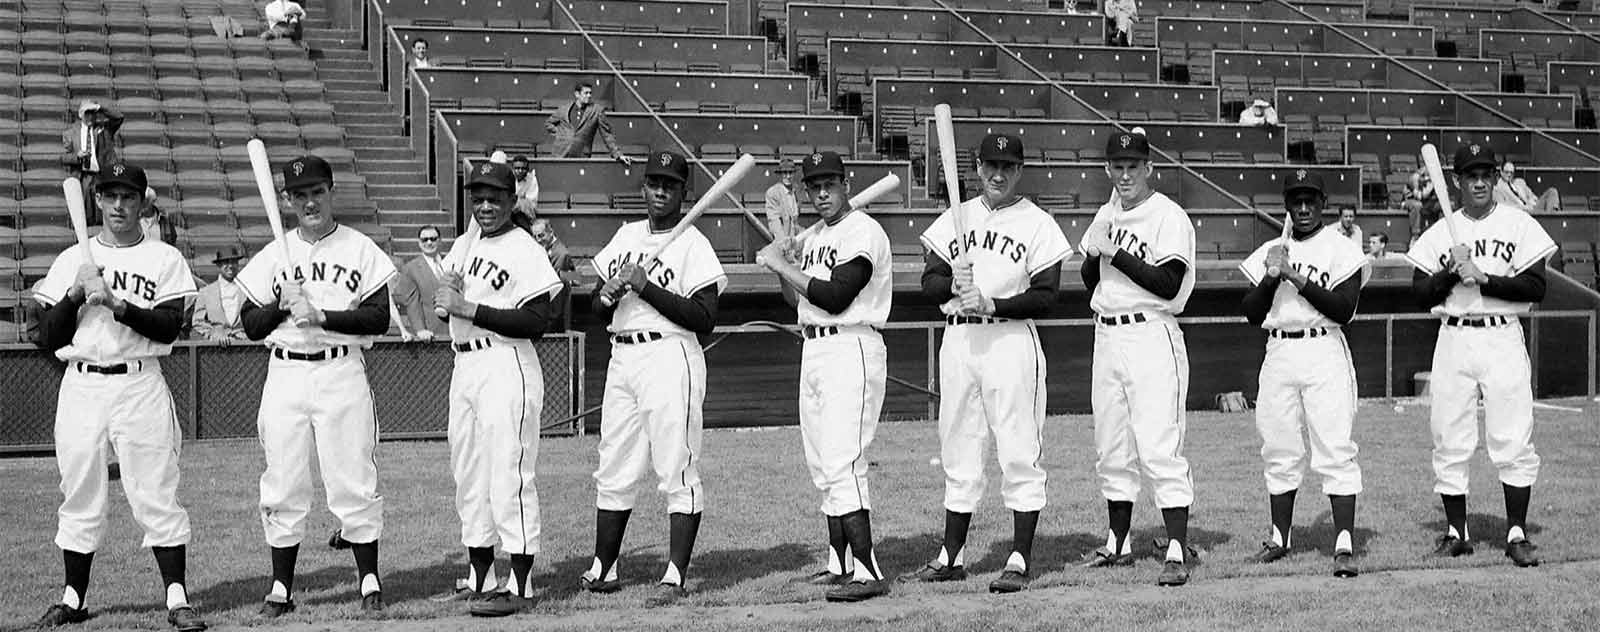 equipe-giants san francisco 1958